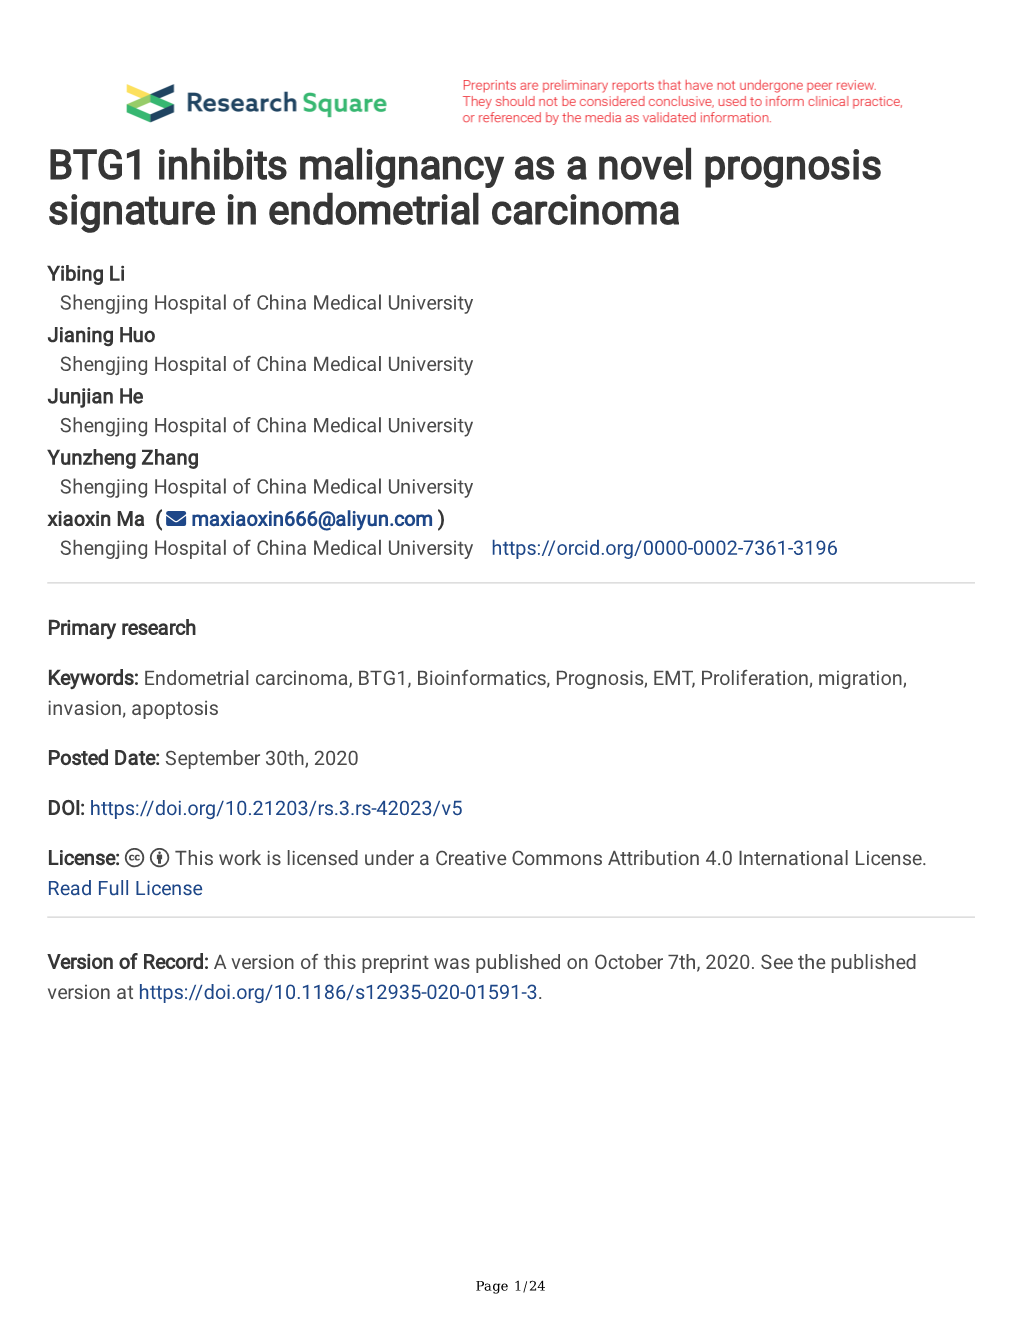 BTG1 Inhibits Malignancy As a Novel Prognosis Signature in Endometrial Carcinoma